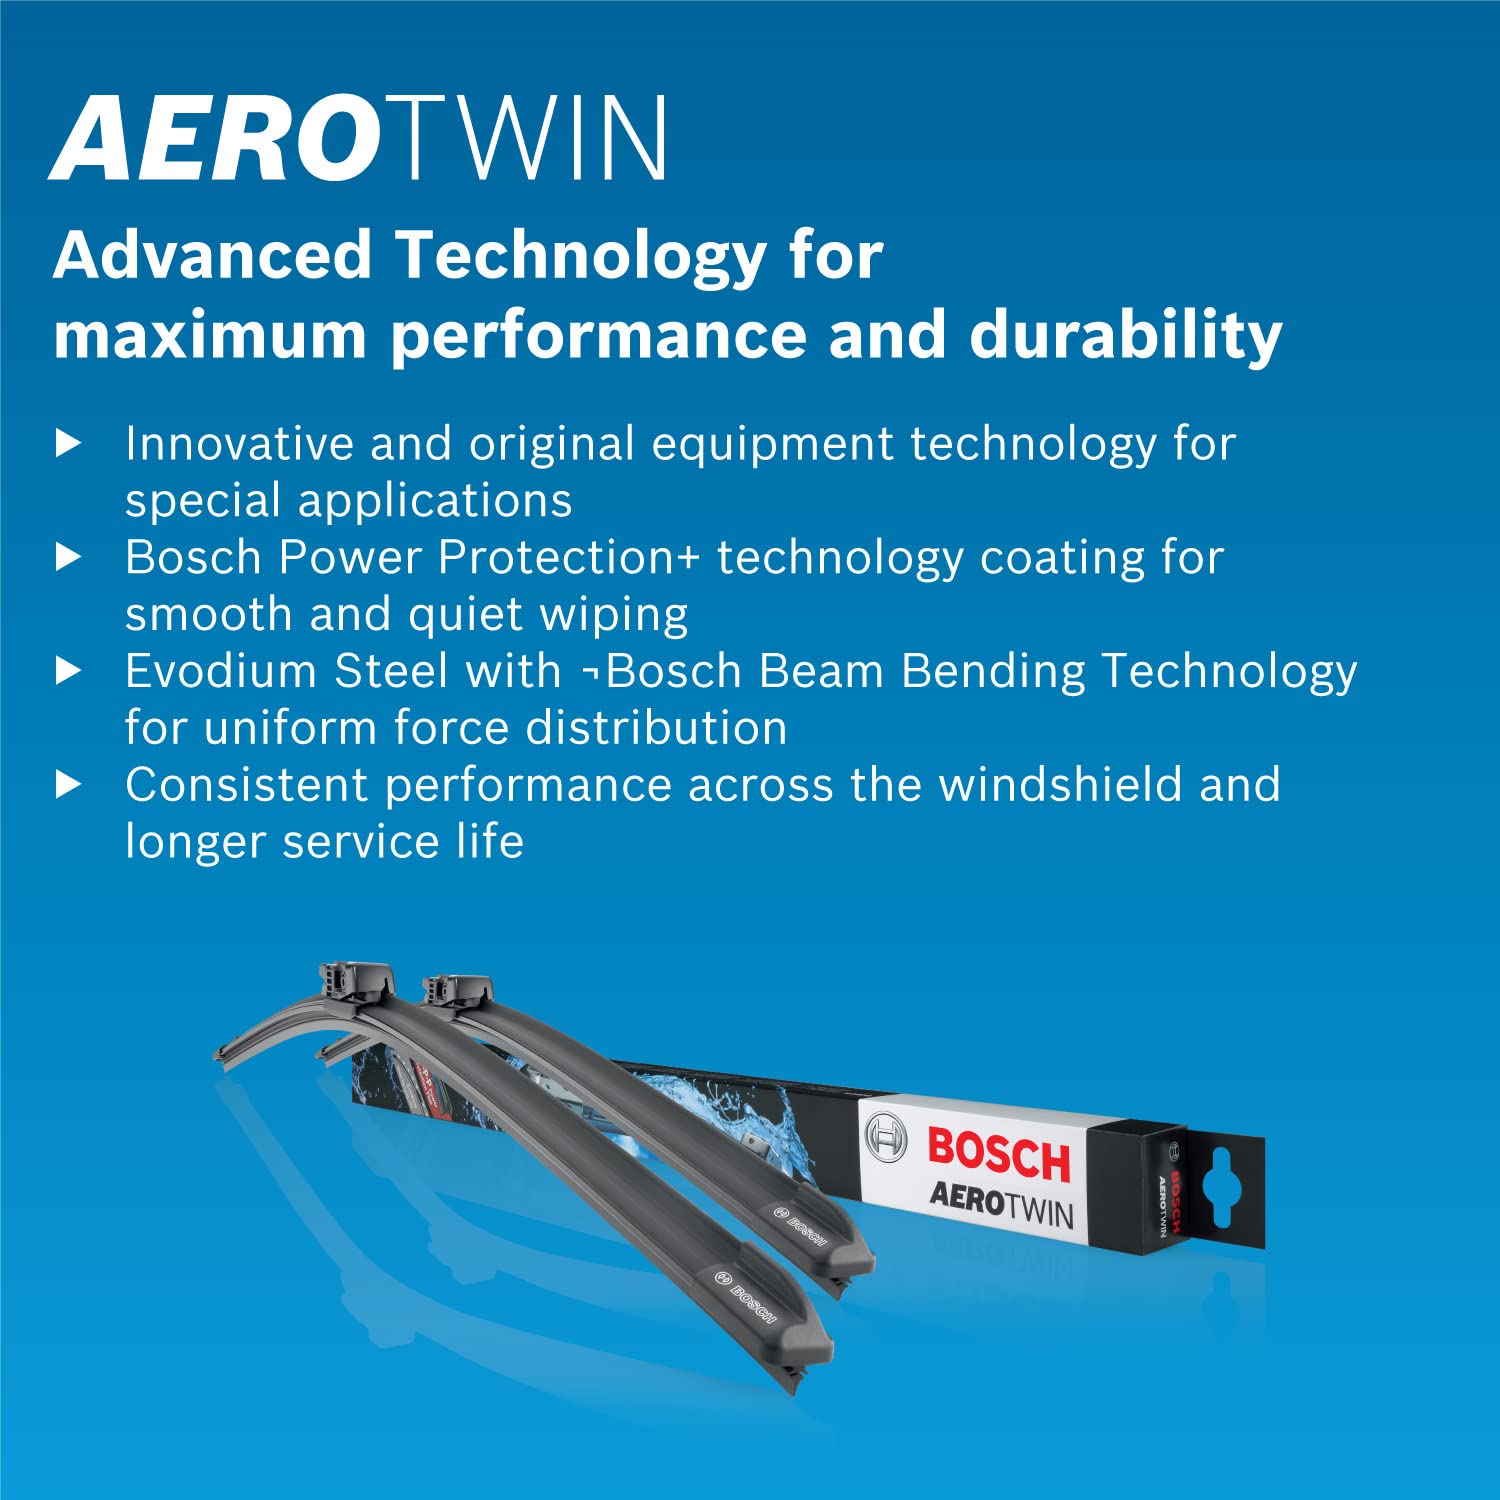 Bosch 3397006943 Aero Twin 6-in-1 16-inch Wiper Blade